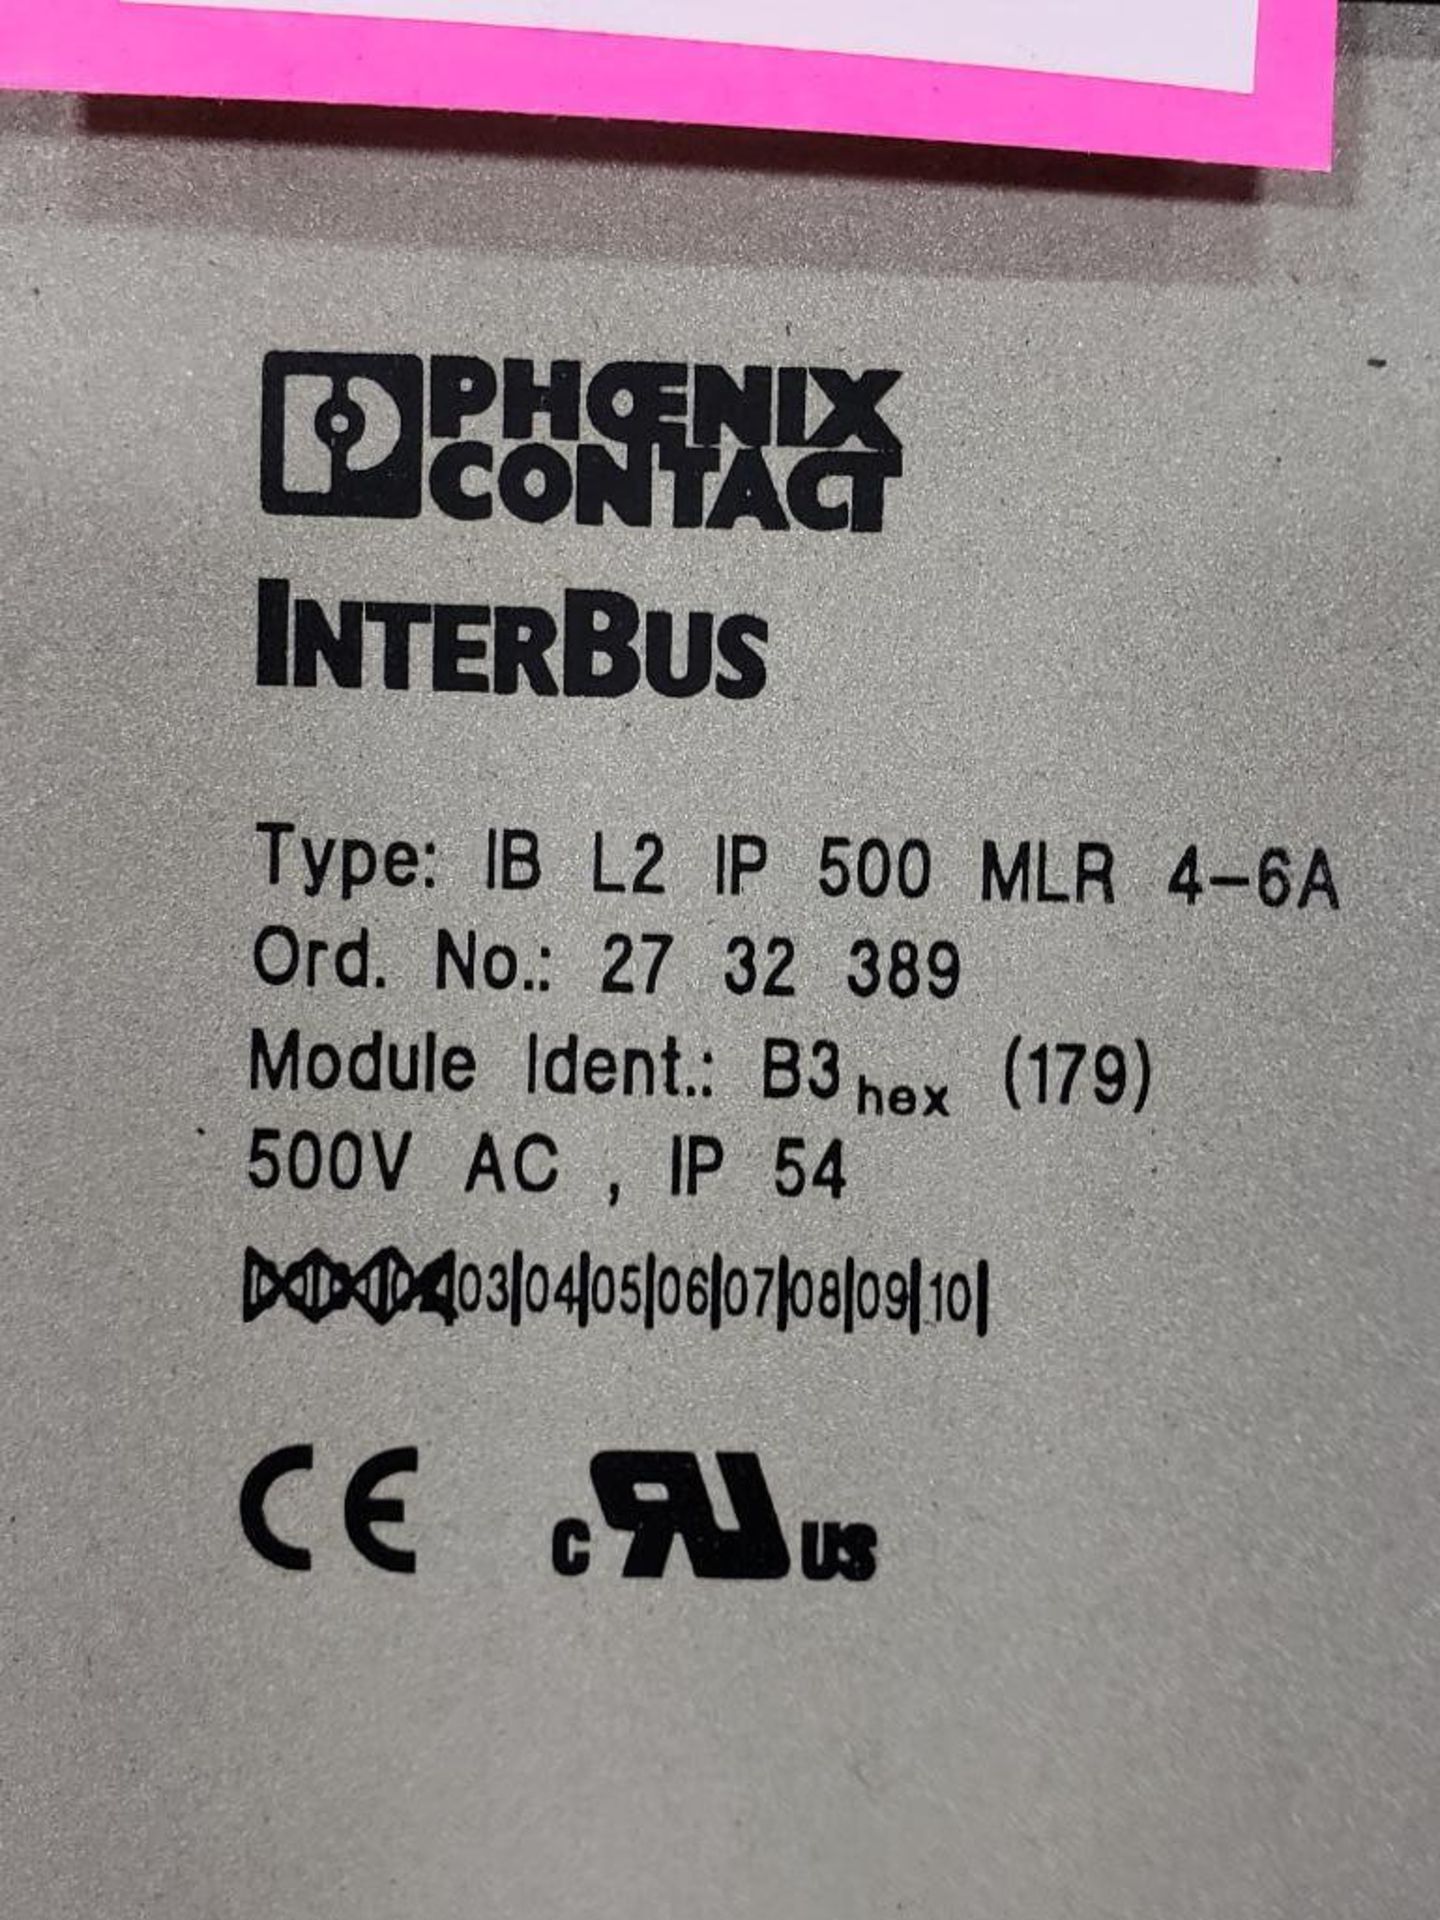 Qty 2 - Phoenix Contact Interbus Model IBS-IP-RFC/LK/ILB-T controller. - Image 2 of 2